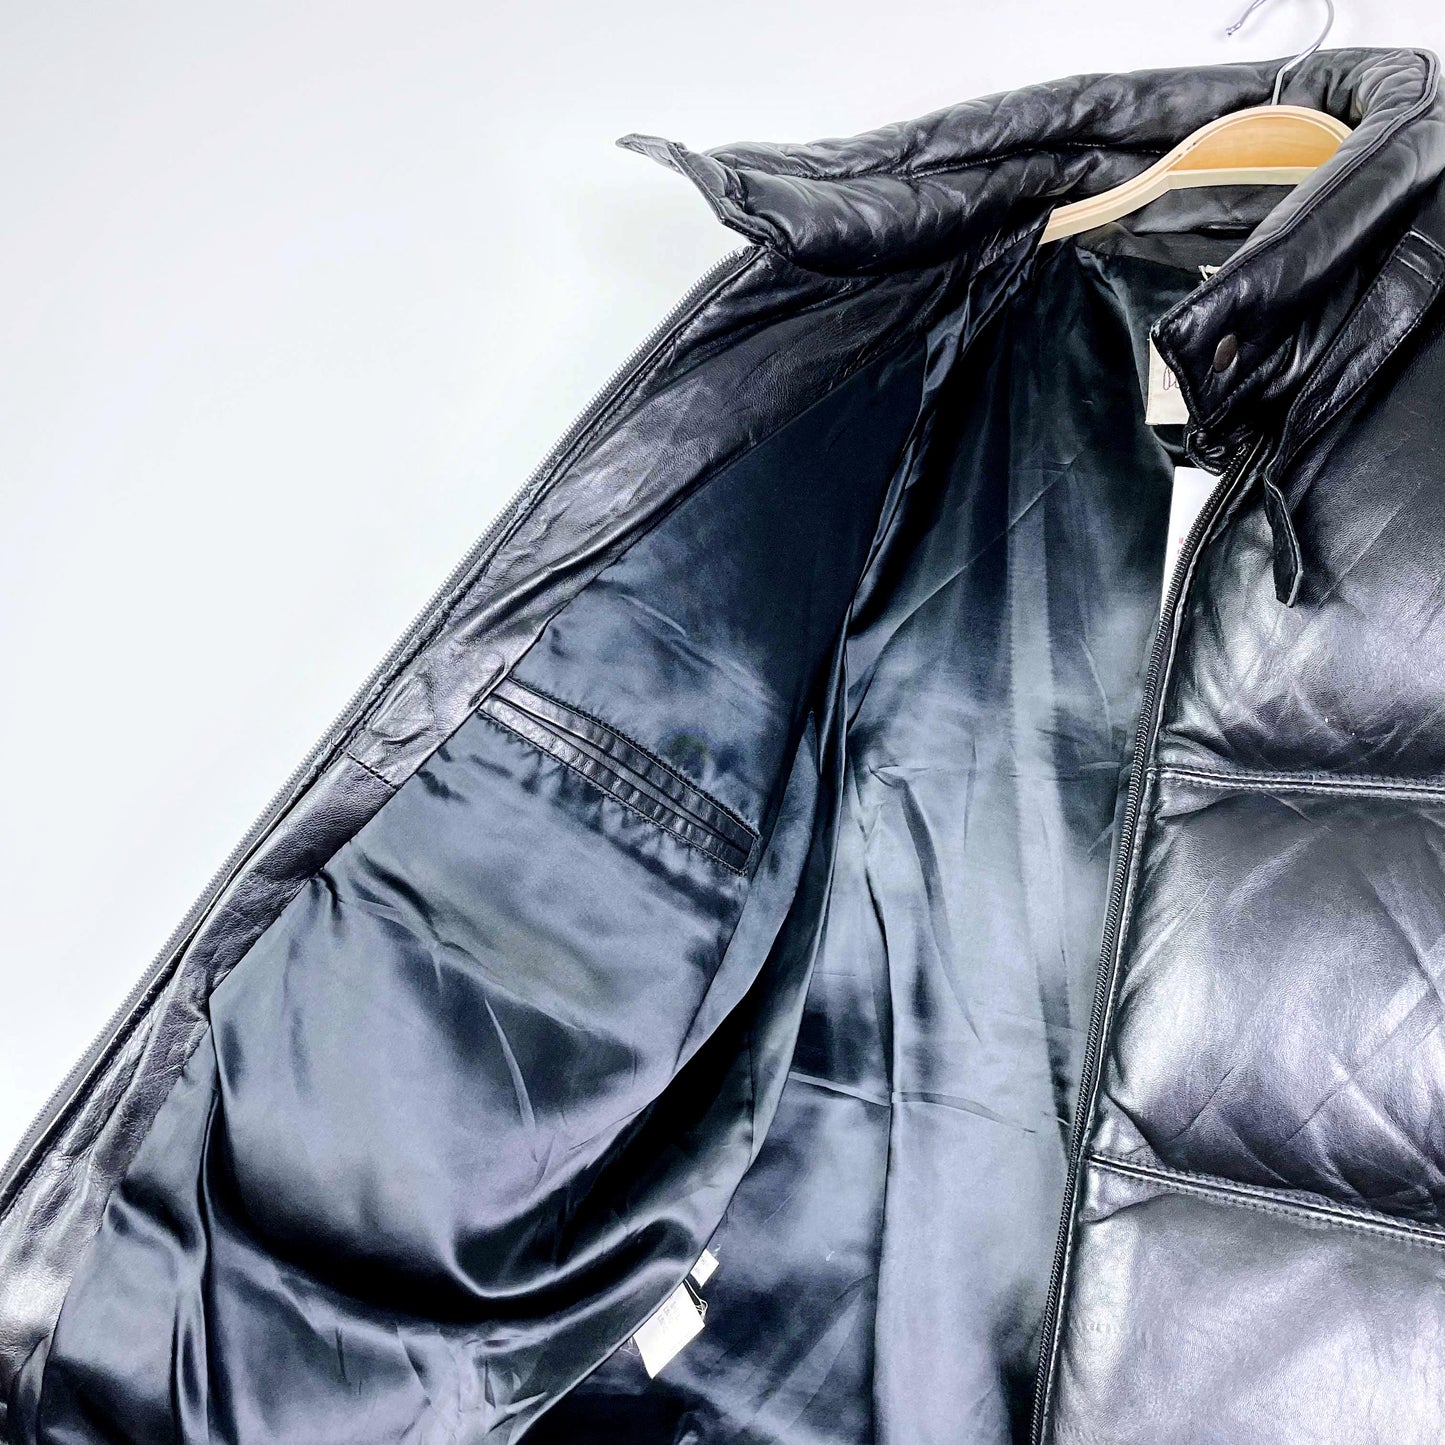 vintage philippe monet black leather puffer jacket - size 44